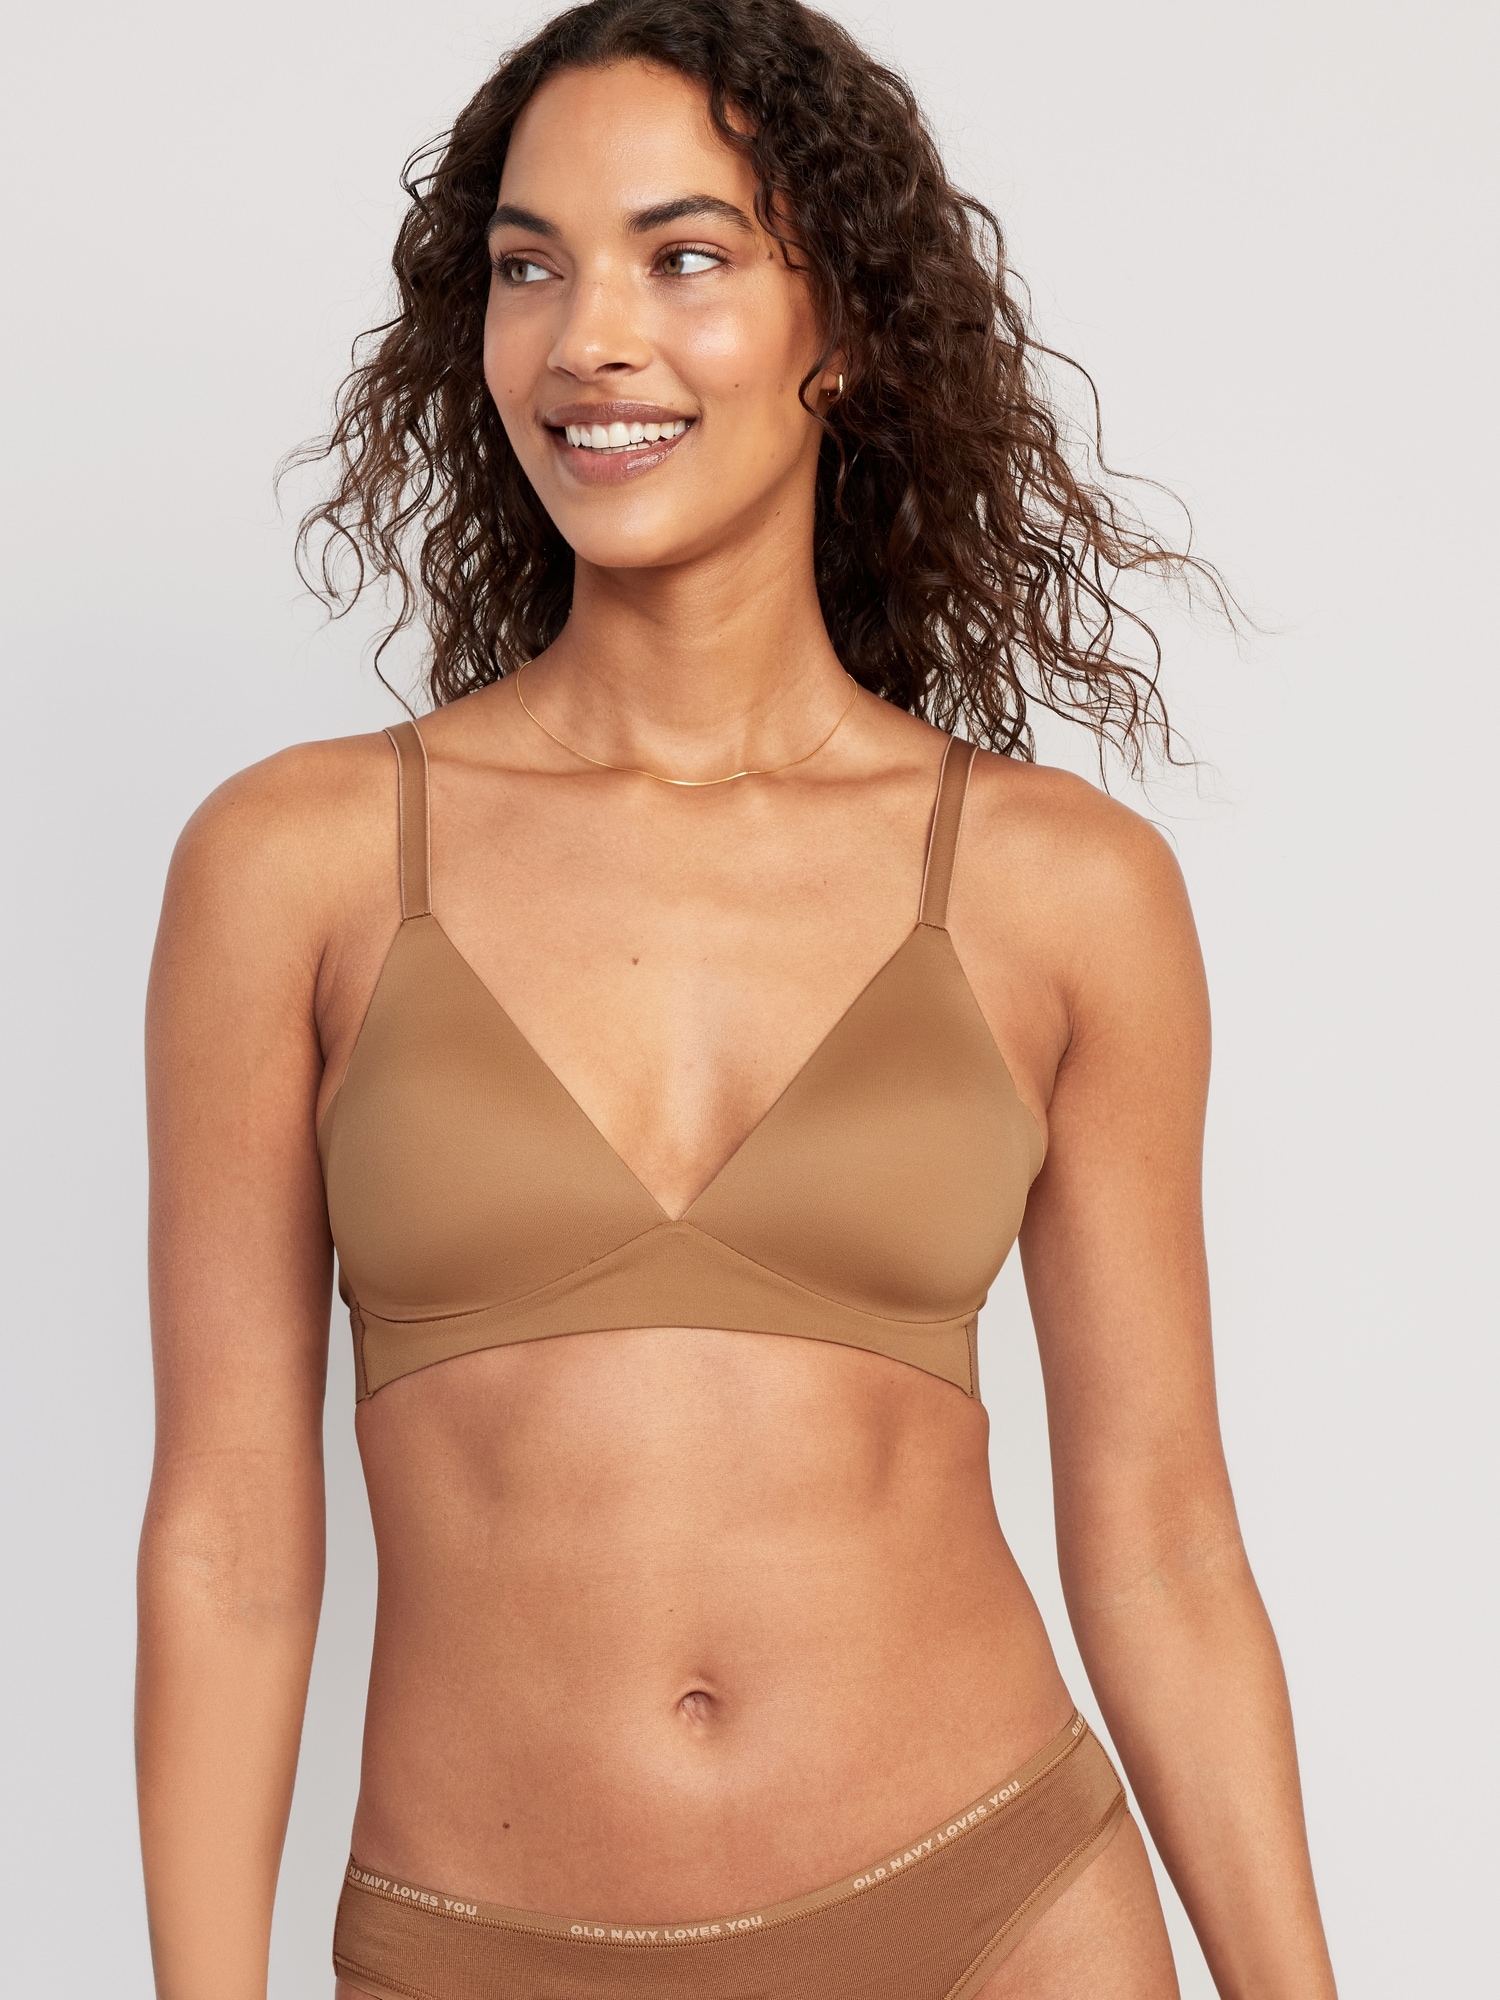 Women Casual Vest Bra Low Back Bras Sexy Seamless Wireless Triangle Strappy  Low Cut Open Bra to Make Breast Look